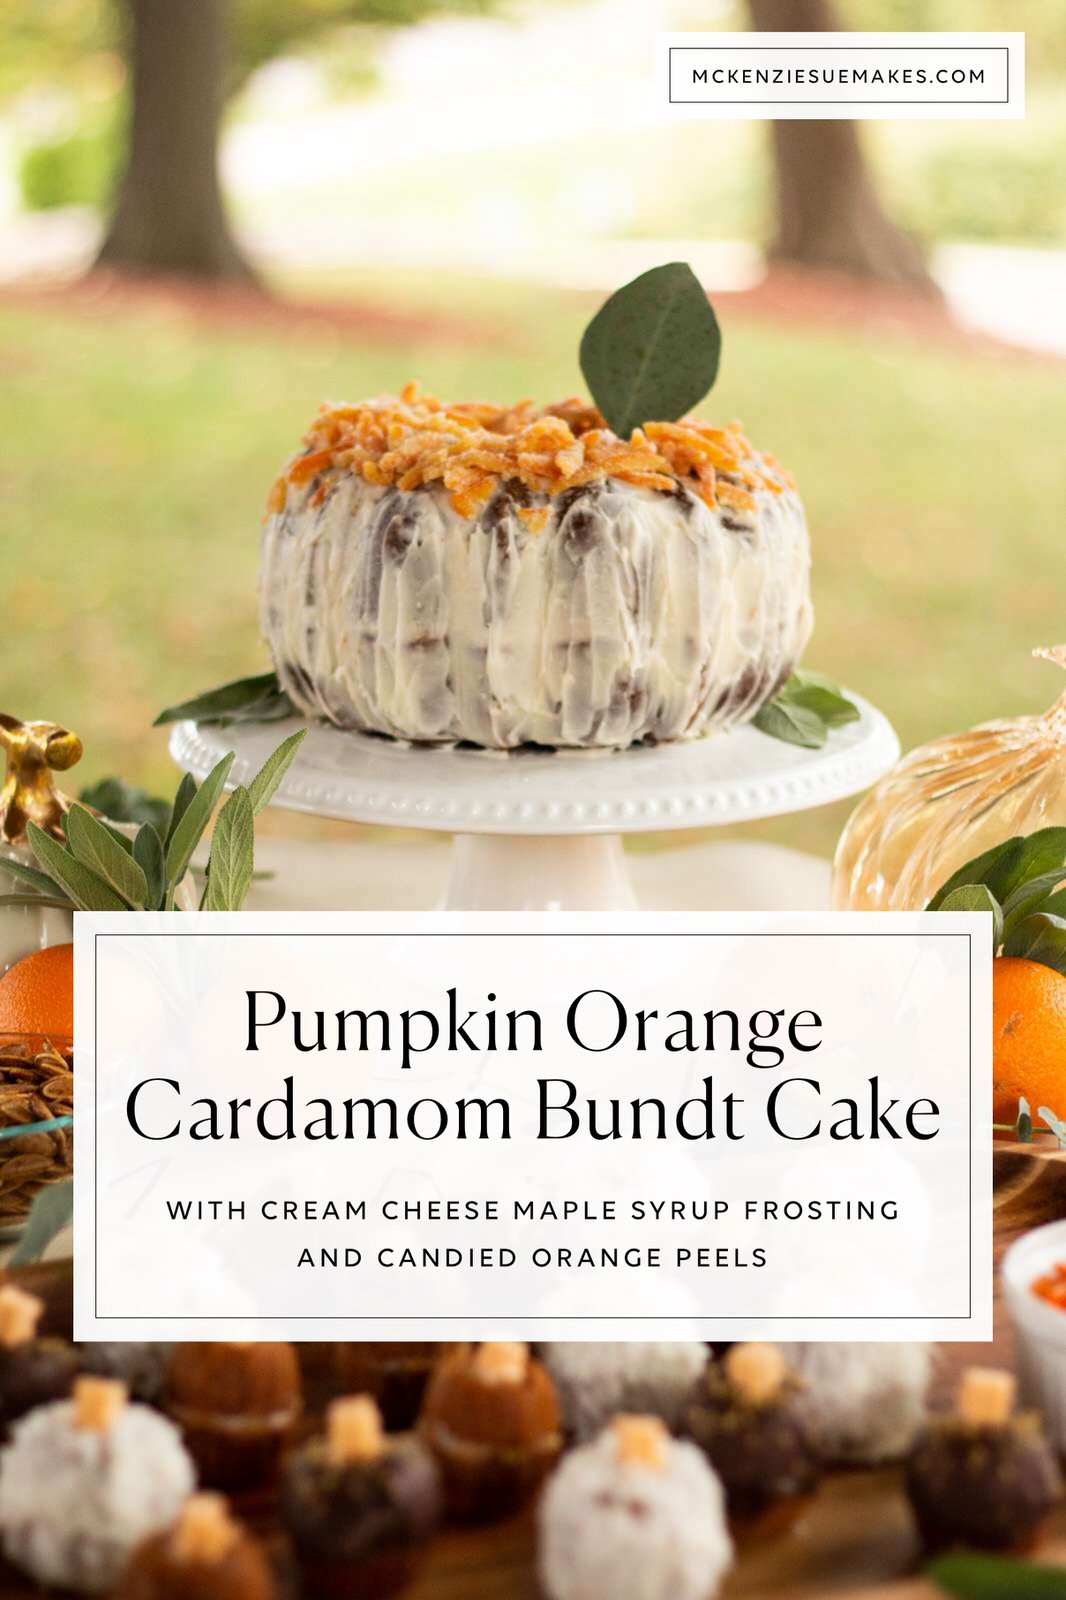 https://www.mckenziesuemakes.com/wp-content/uploads/2021/10/pumpkin-orange-cardamom-bundt-cake-1.jpg